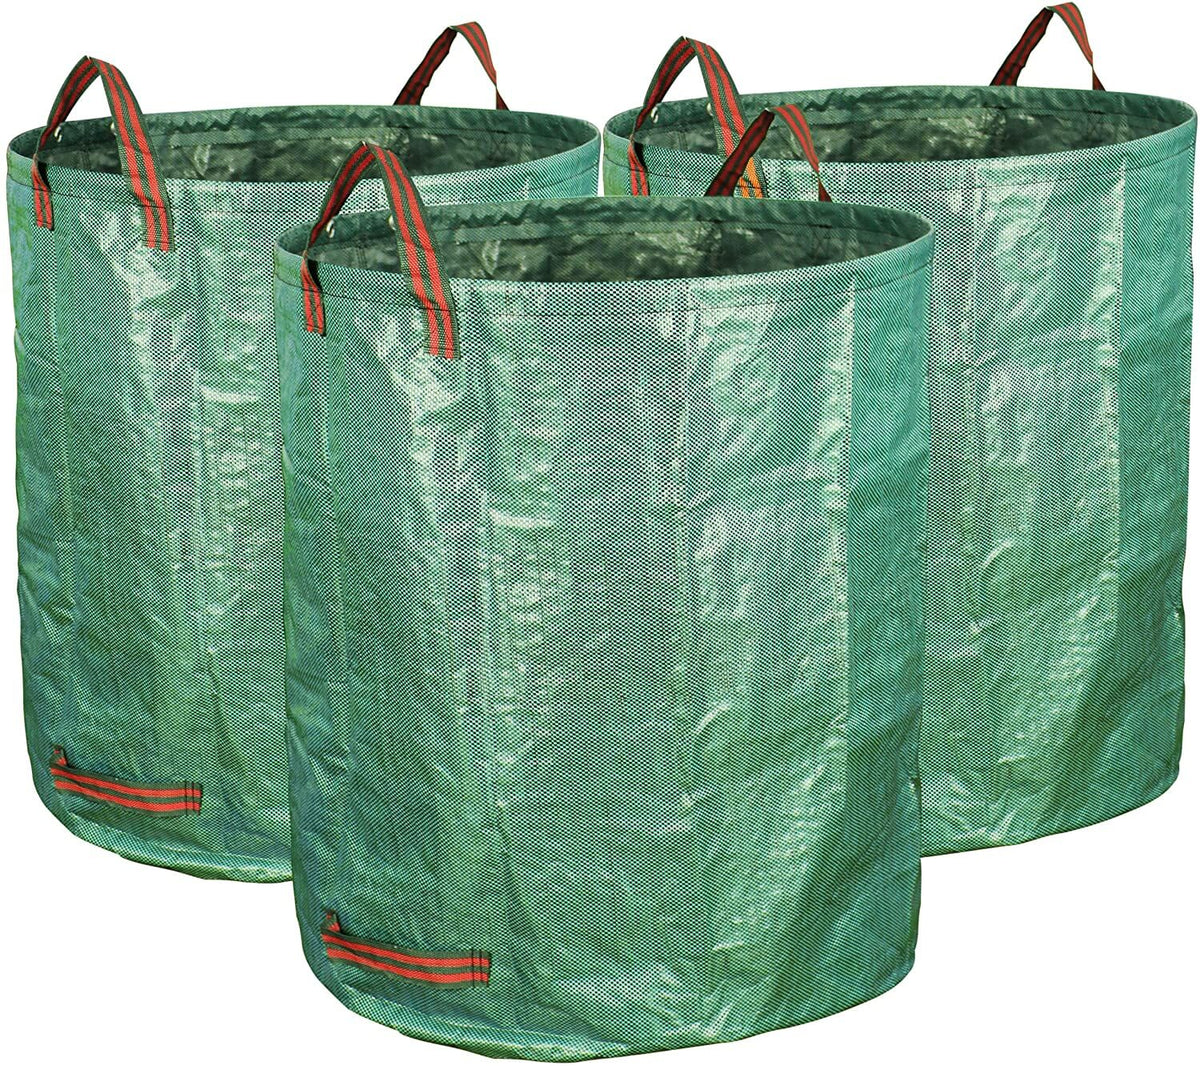 1-3Pack 72 Gallon Garden Leaf Bags Reusable Yard Lawn Waste Bag 4